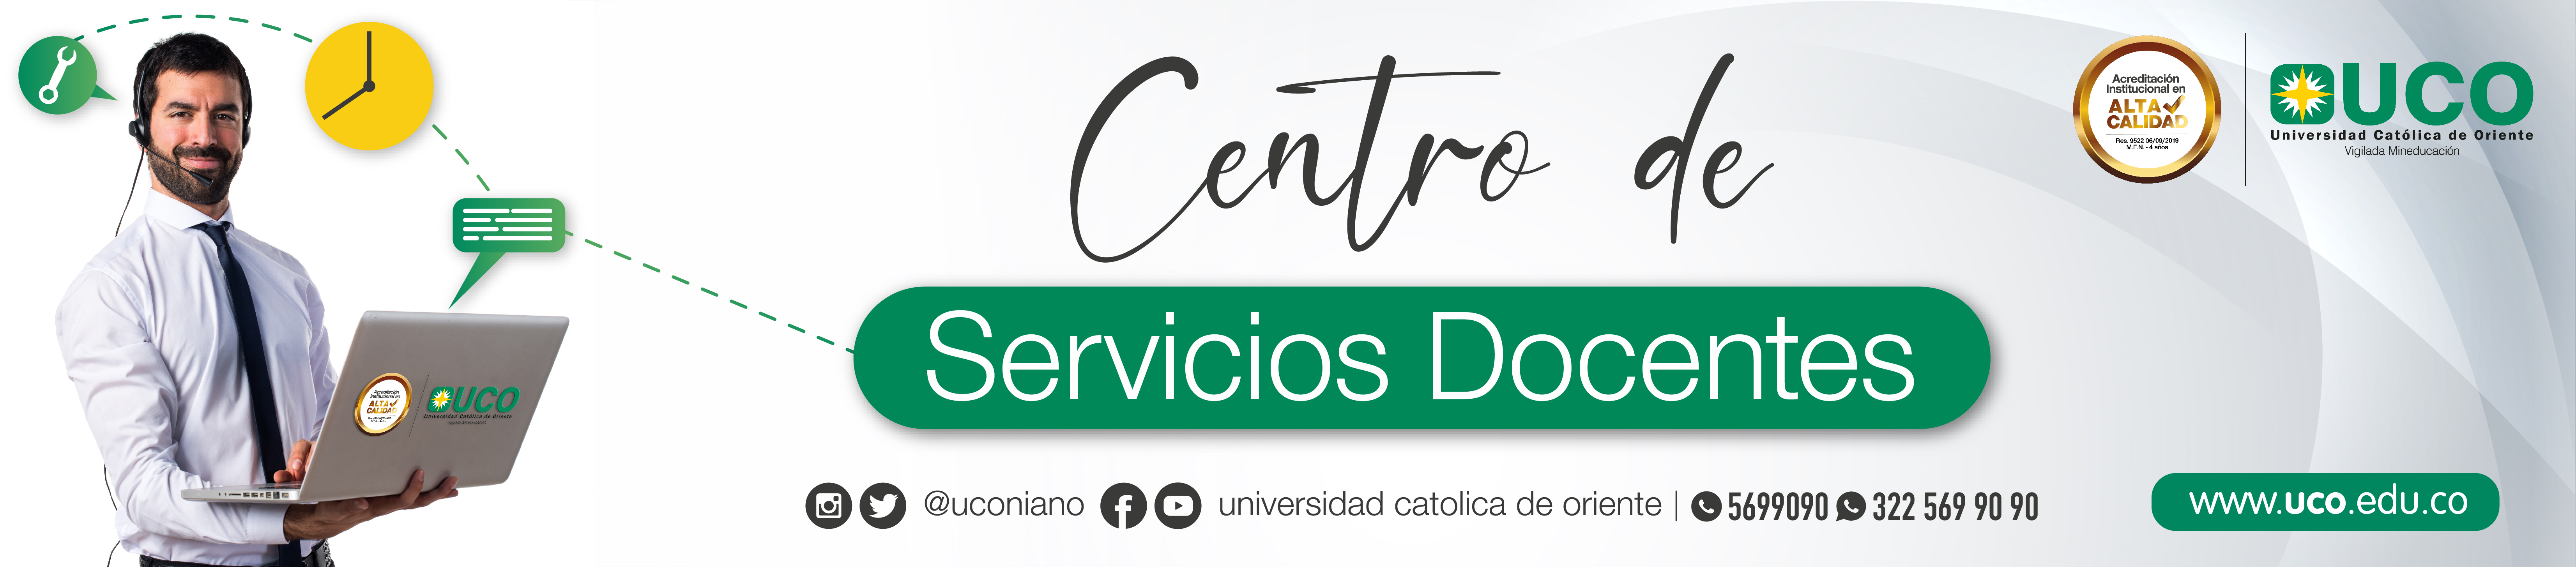 Banner`s Servicios Docentes-19.jpg